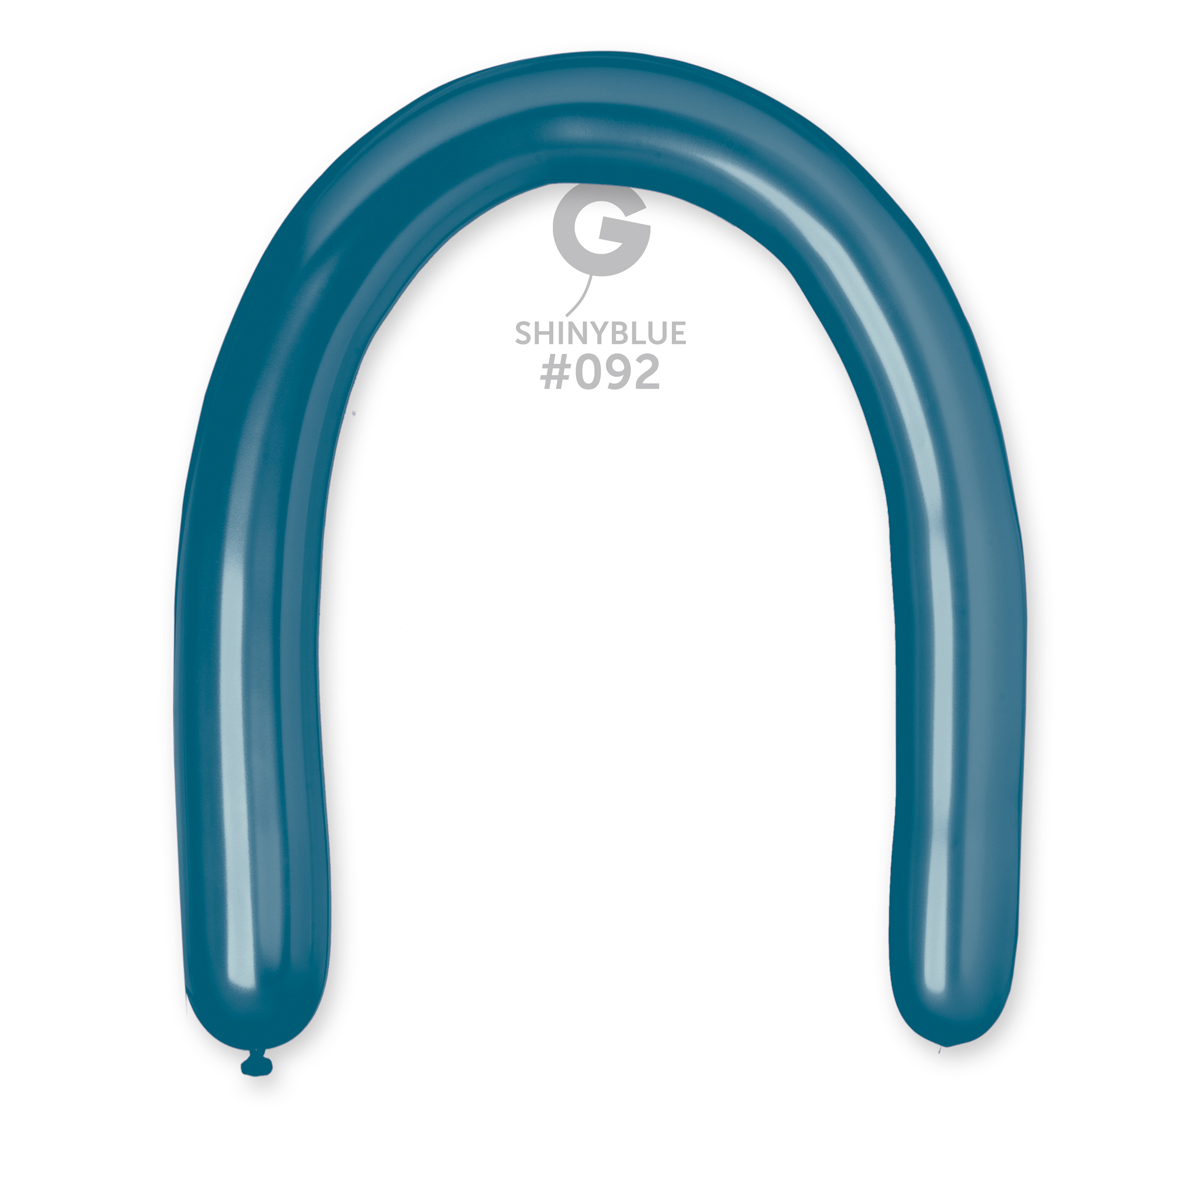 360G Gemar Latex Balloons (Bag of 25) Shiny Blue Twisting/Modelling